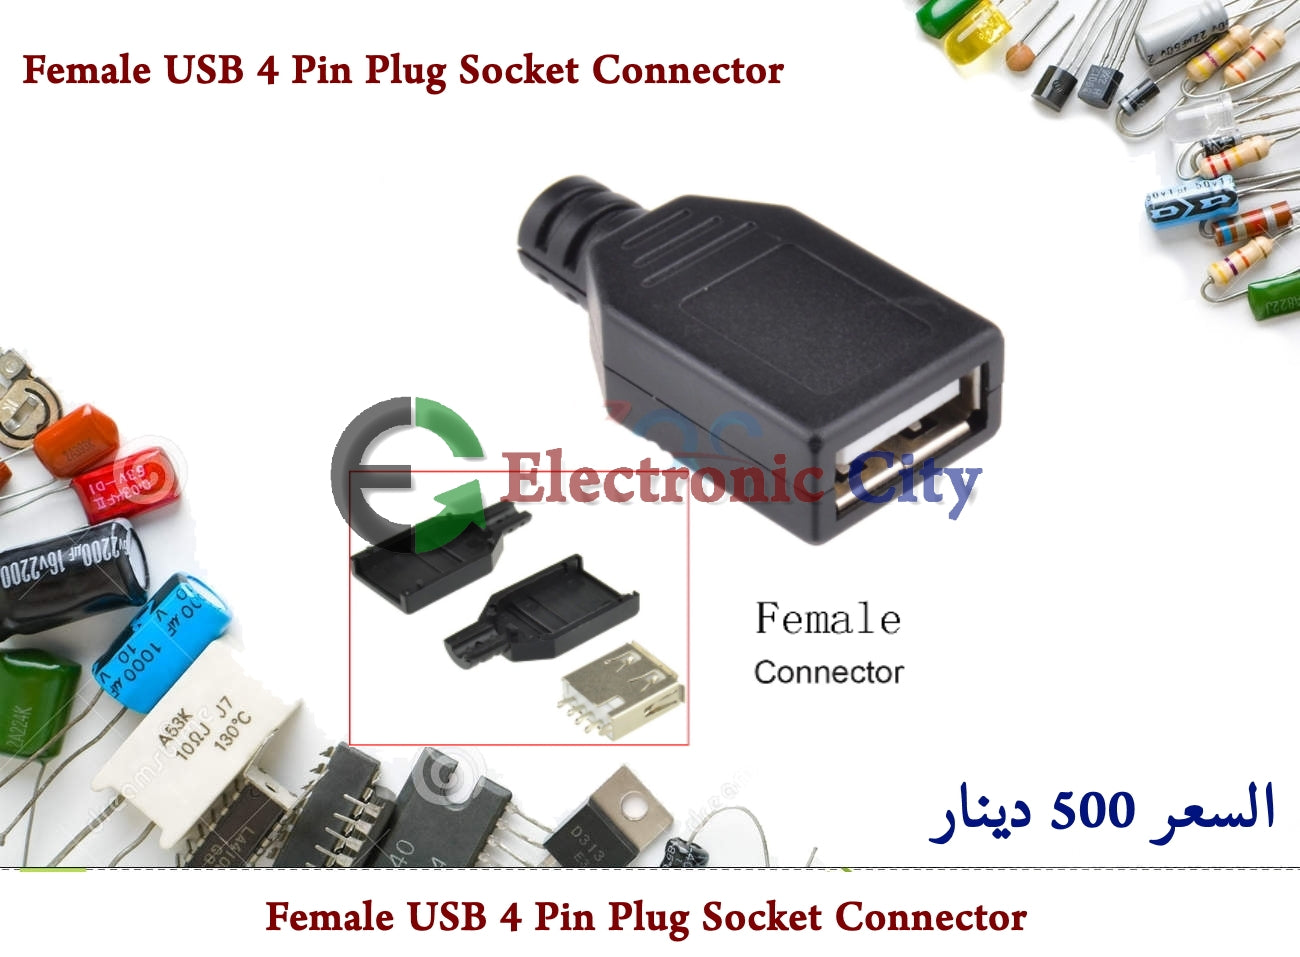 USB 2.0 Type A Female USB 4 Pin Plug Socket Connector